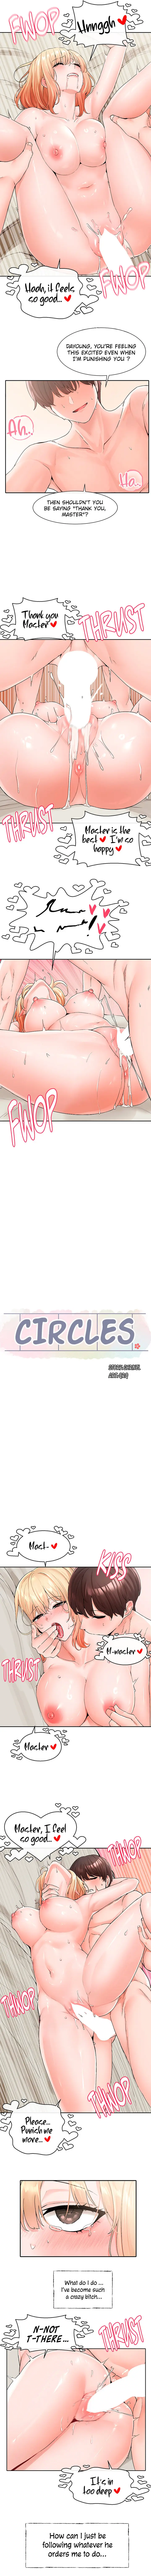 circles-chap-118-4